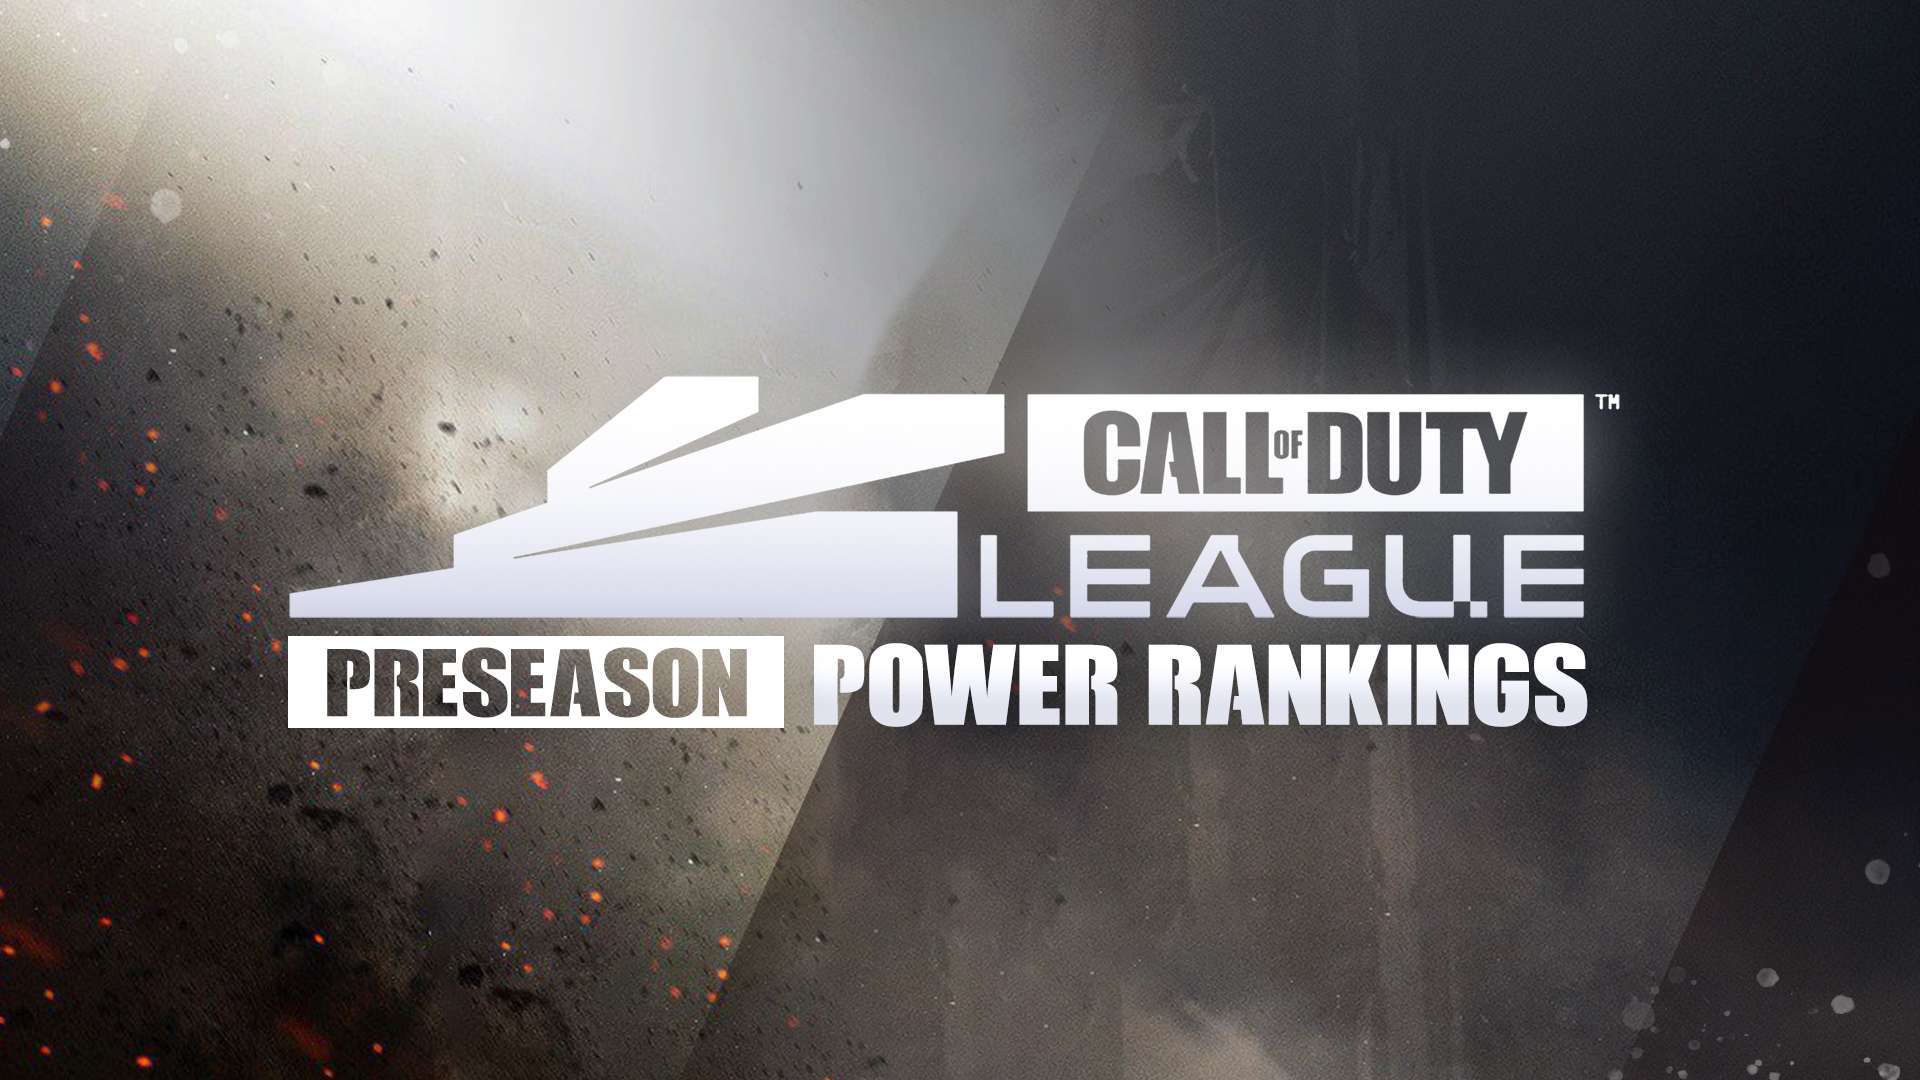 An image of Call of Duty League preseason power rankings text